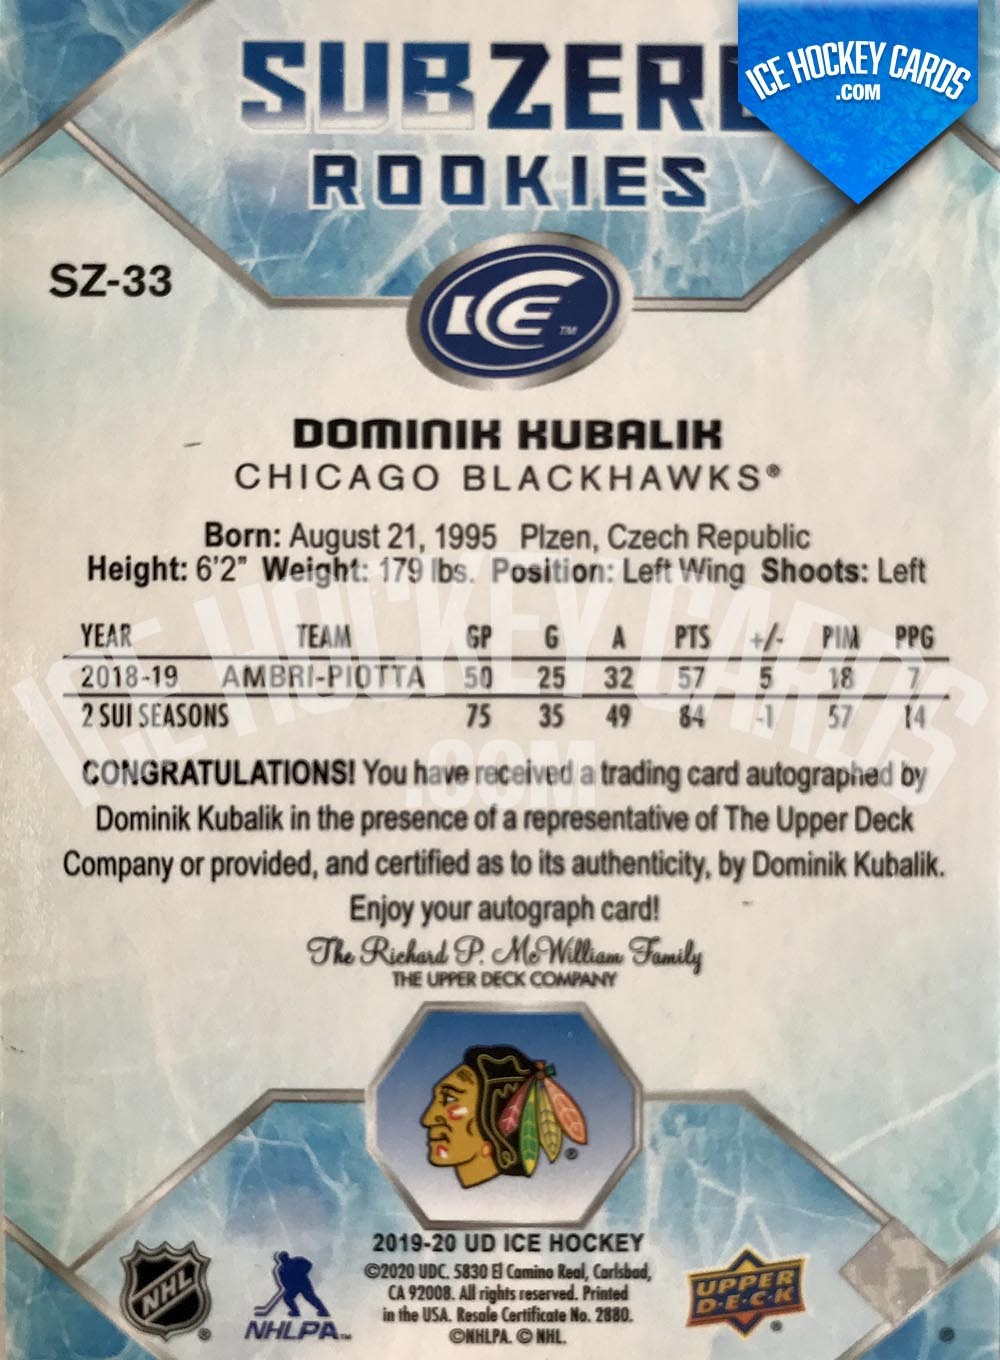 Upper Deck - ICE 2019-20 - Dominik Kubalik Subzero Rookies Autograph Card back